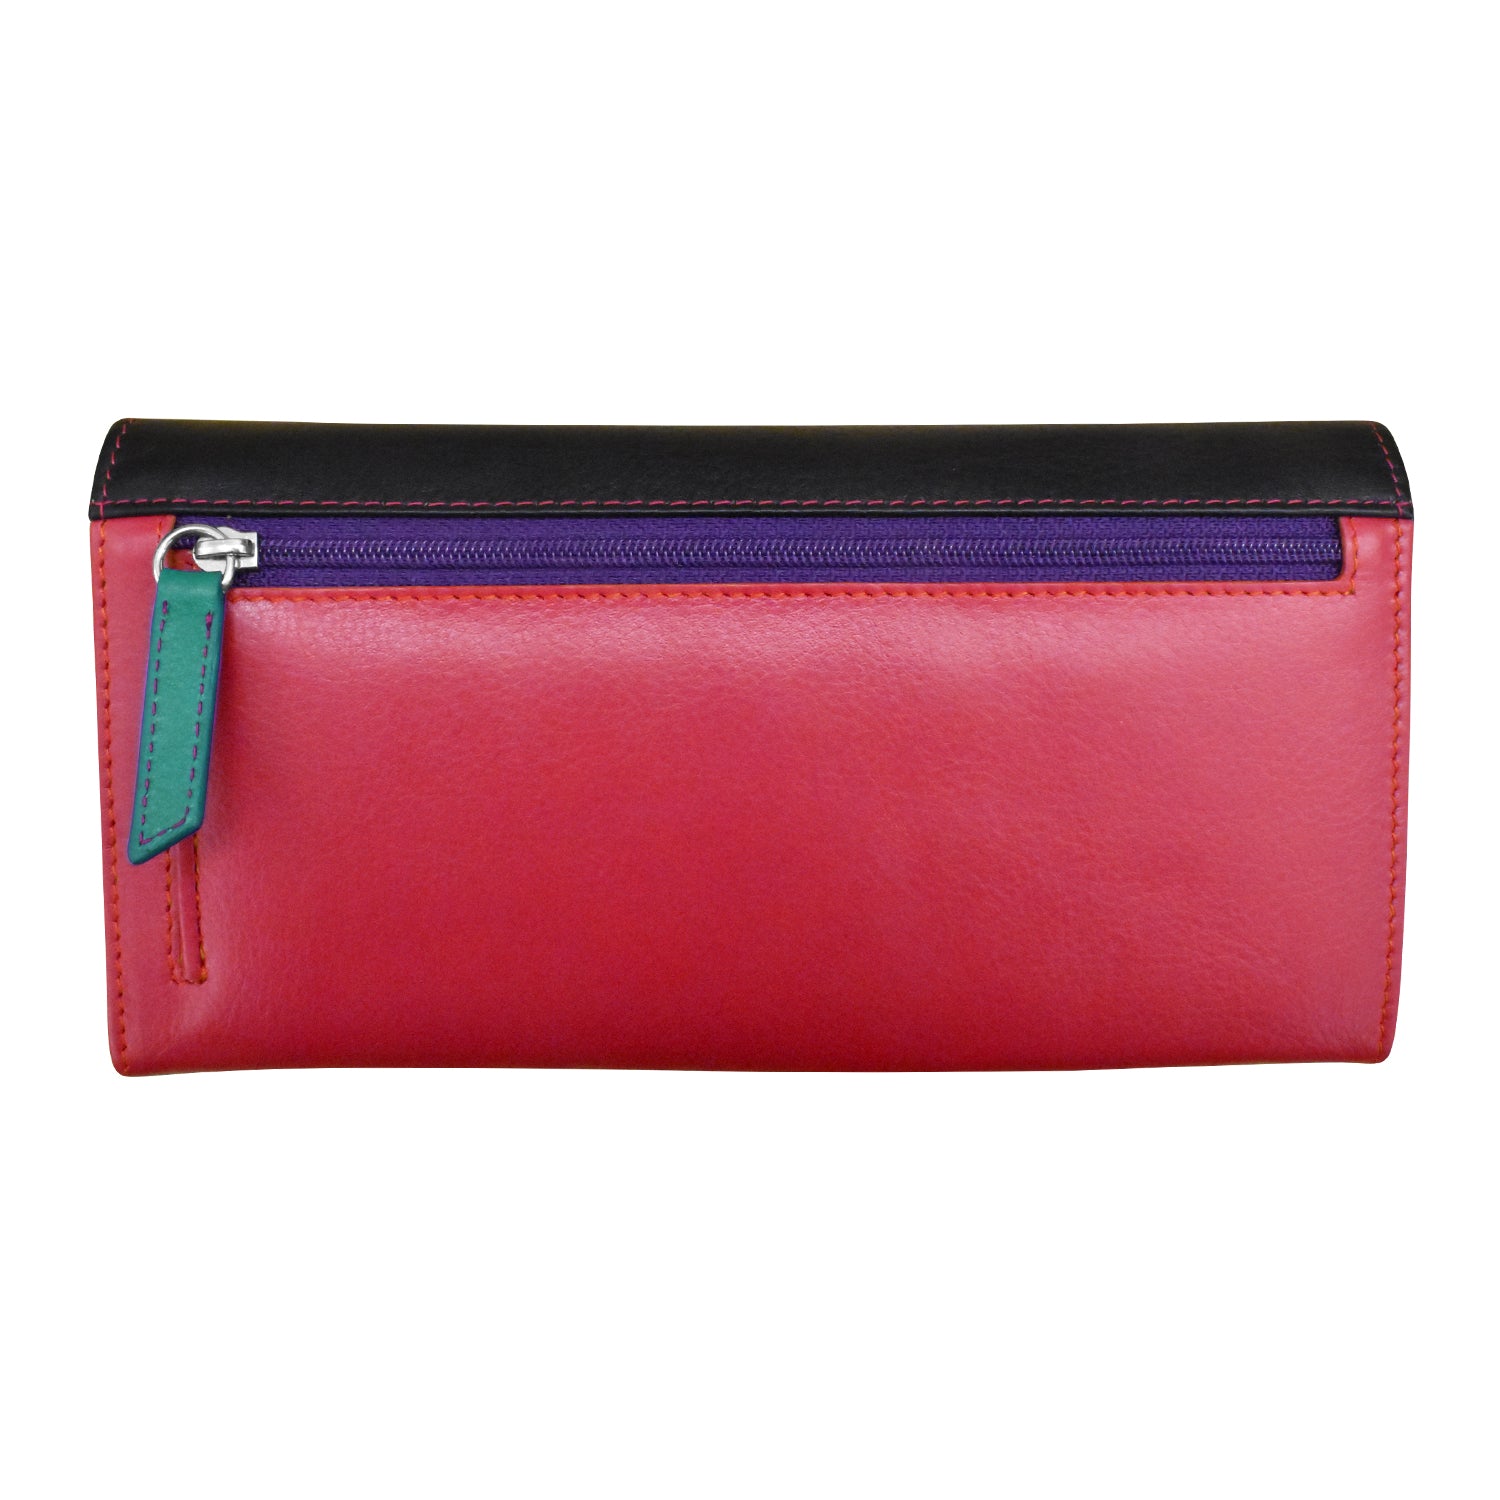 Golunski Branded Ladies Smooth Italian Style Leather Purse Wallet 18 x 10cm  - Red - Boros Bags